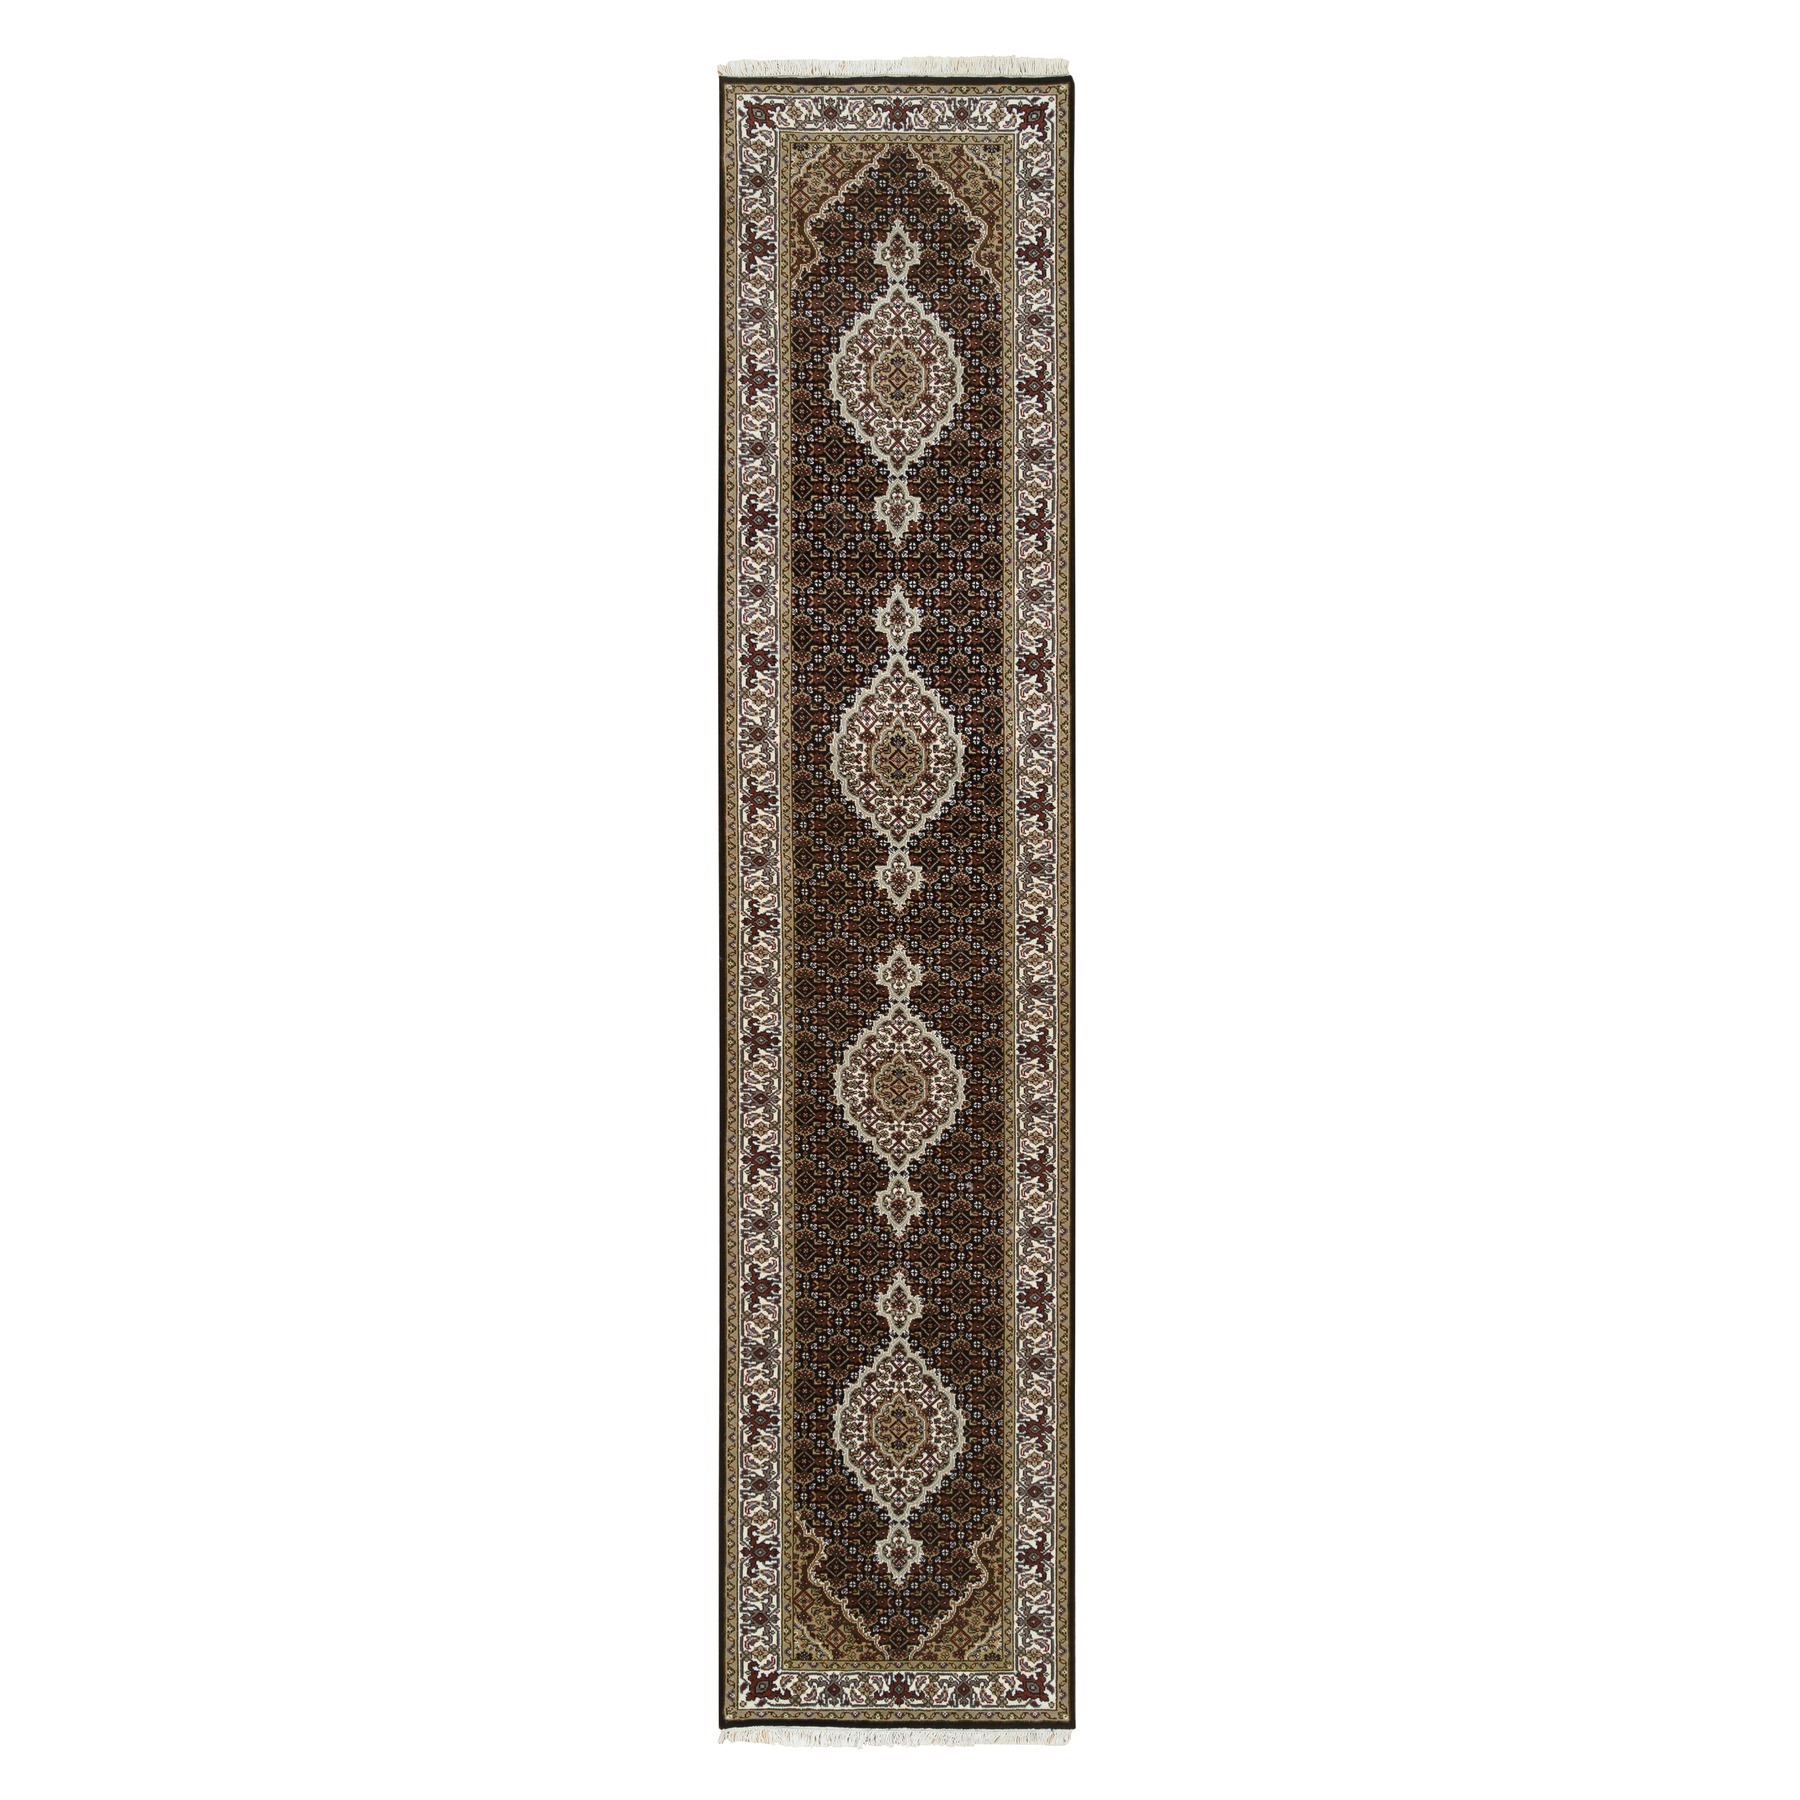 2'8"x12'4" Rich Black, Tabriz Mahi with Fish Medallion Design, 175 KPSI, 100% Wool, Hand Woven, Runner Oriental Rug 